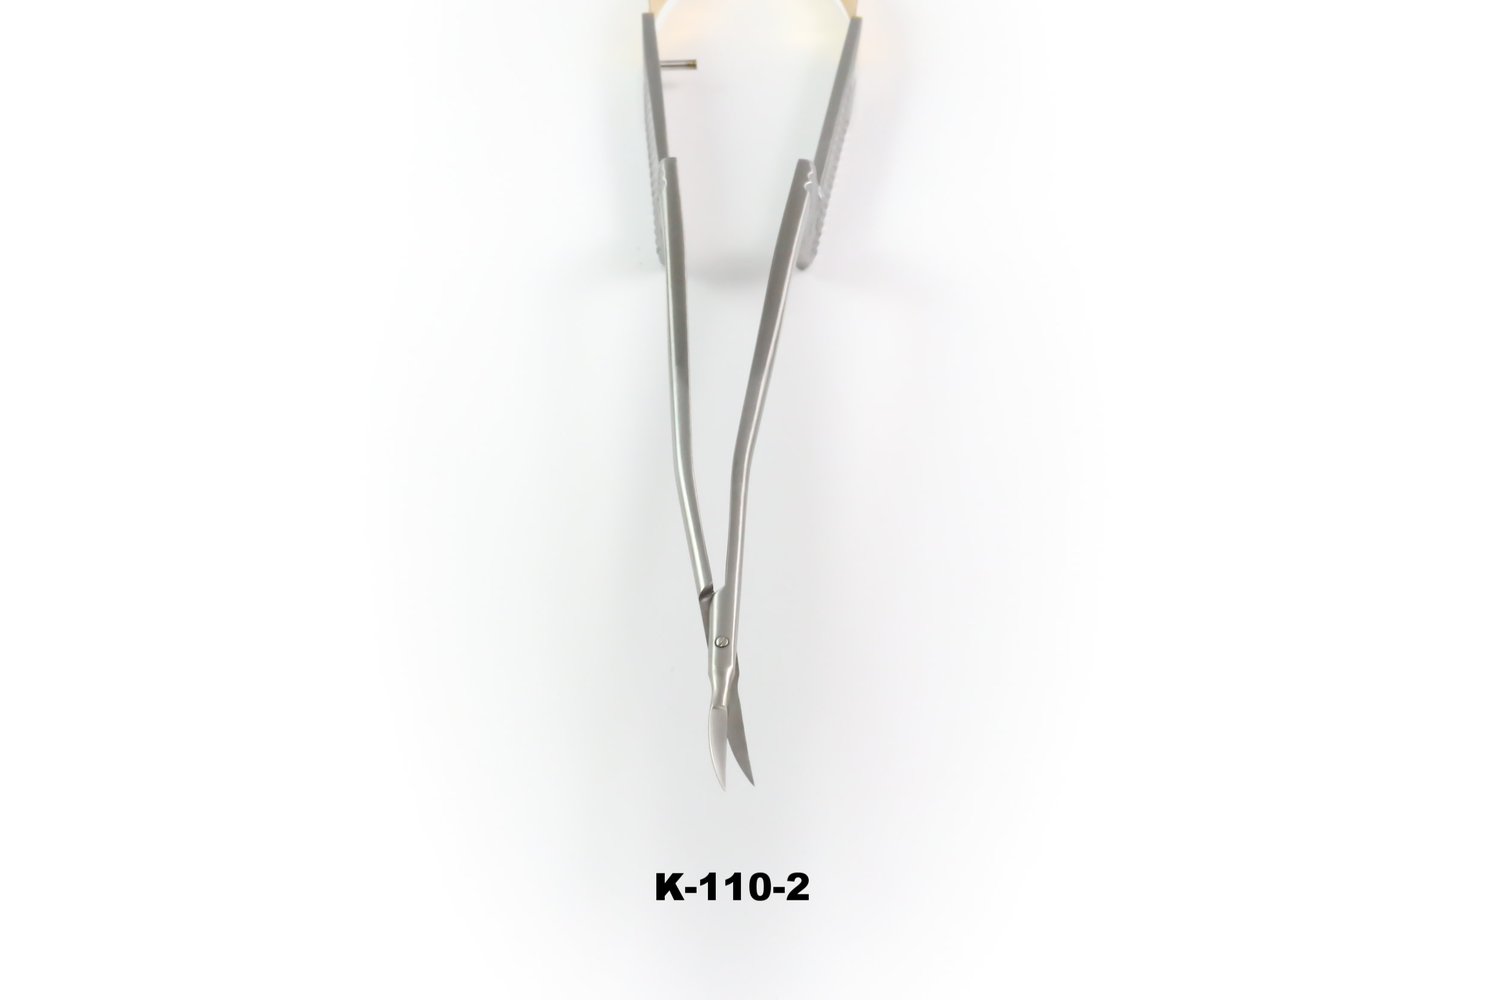 Kamiyama Micro Scissors Neurosurgery 18cm,Bayonet Handle Japanese stai  steel